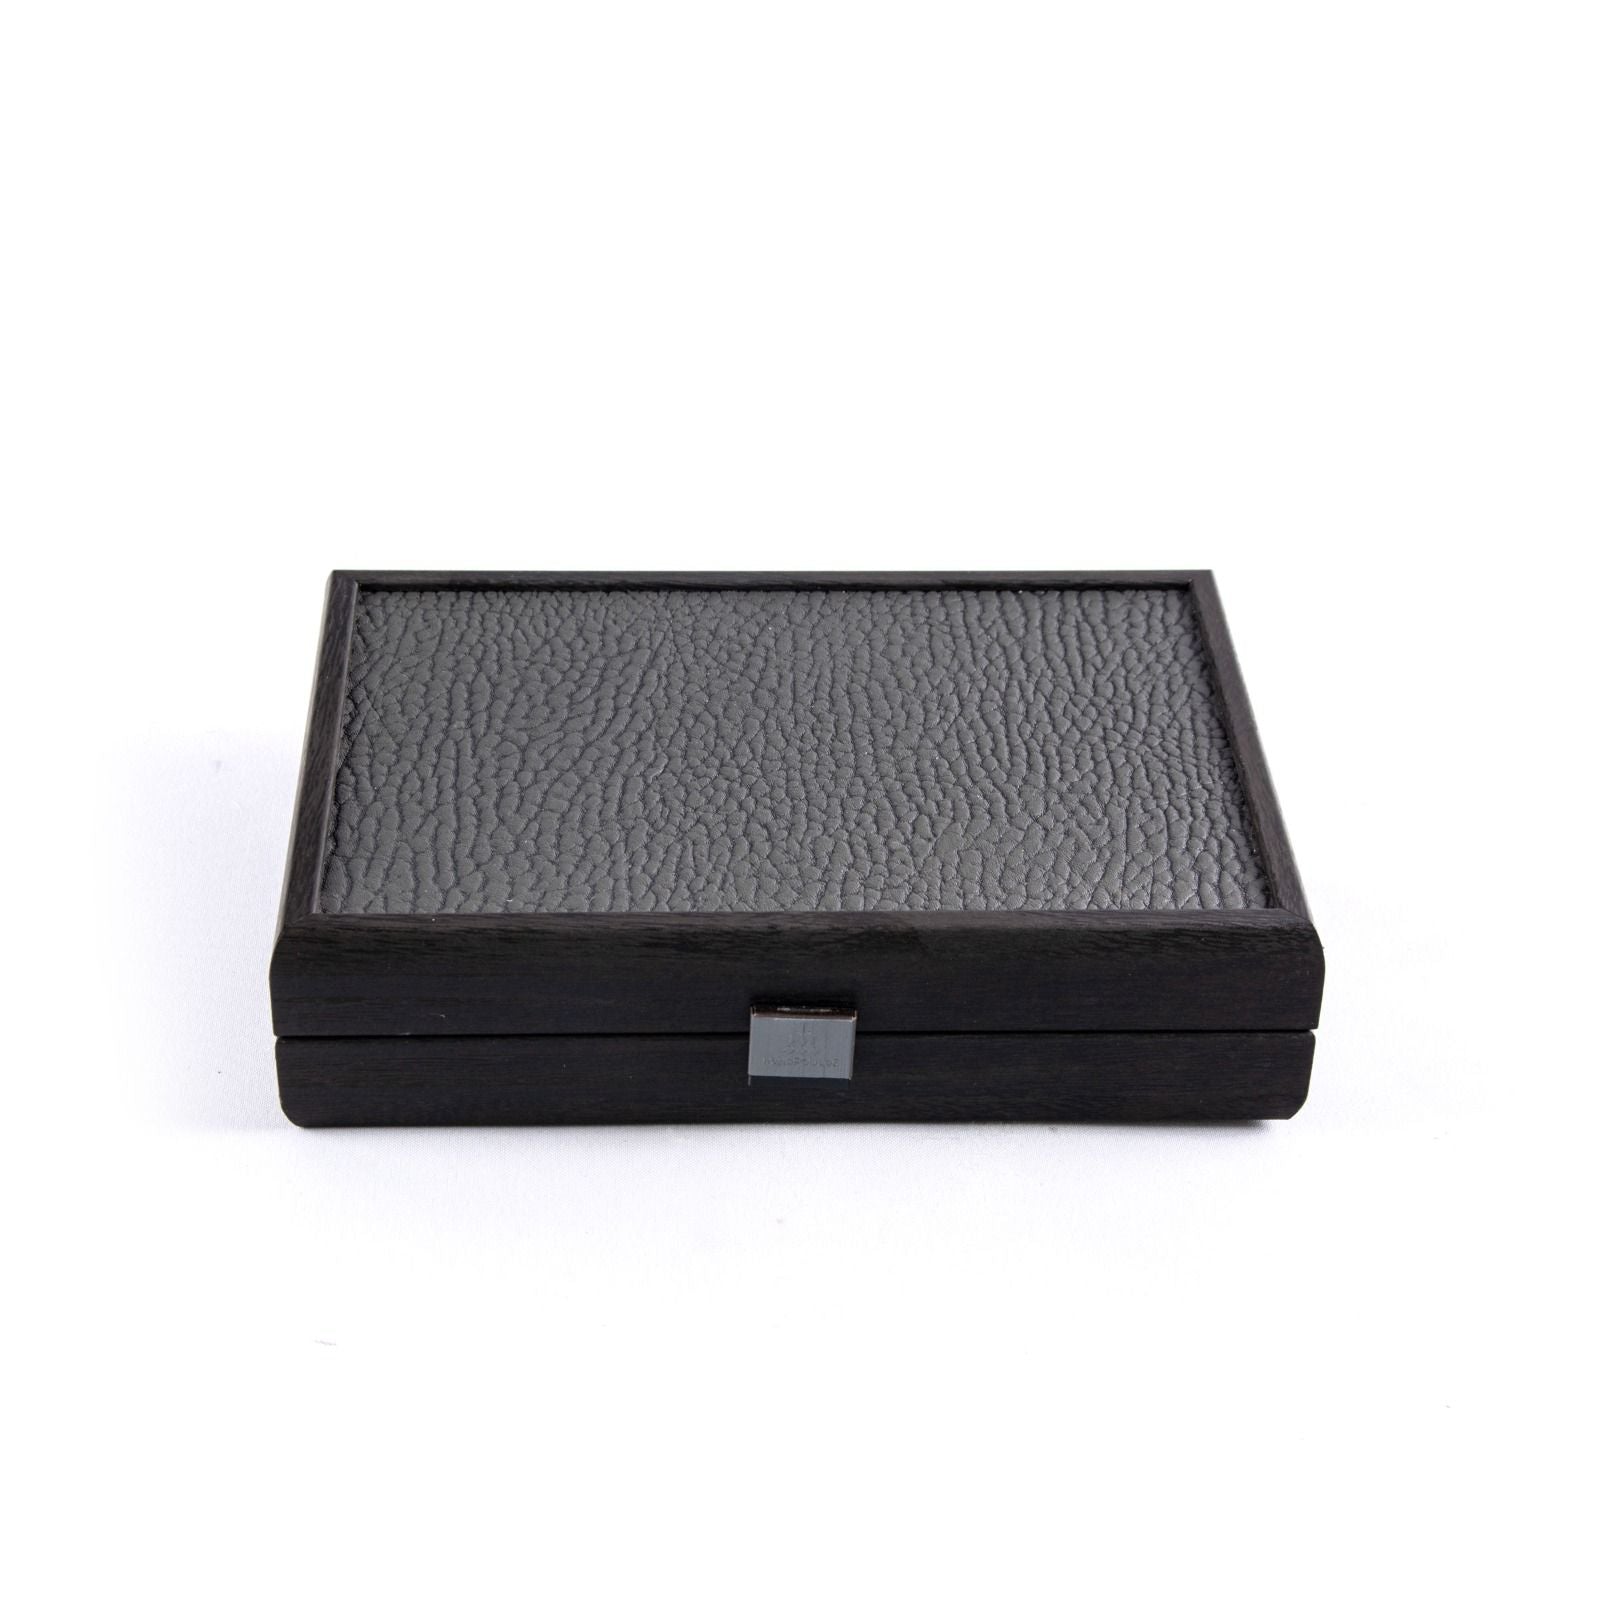 Domino Set in Leatherette Wooden Case - Black